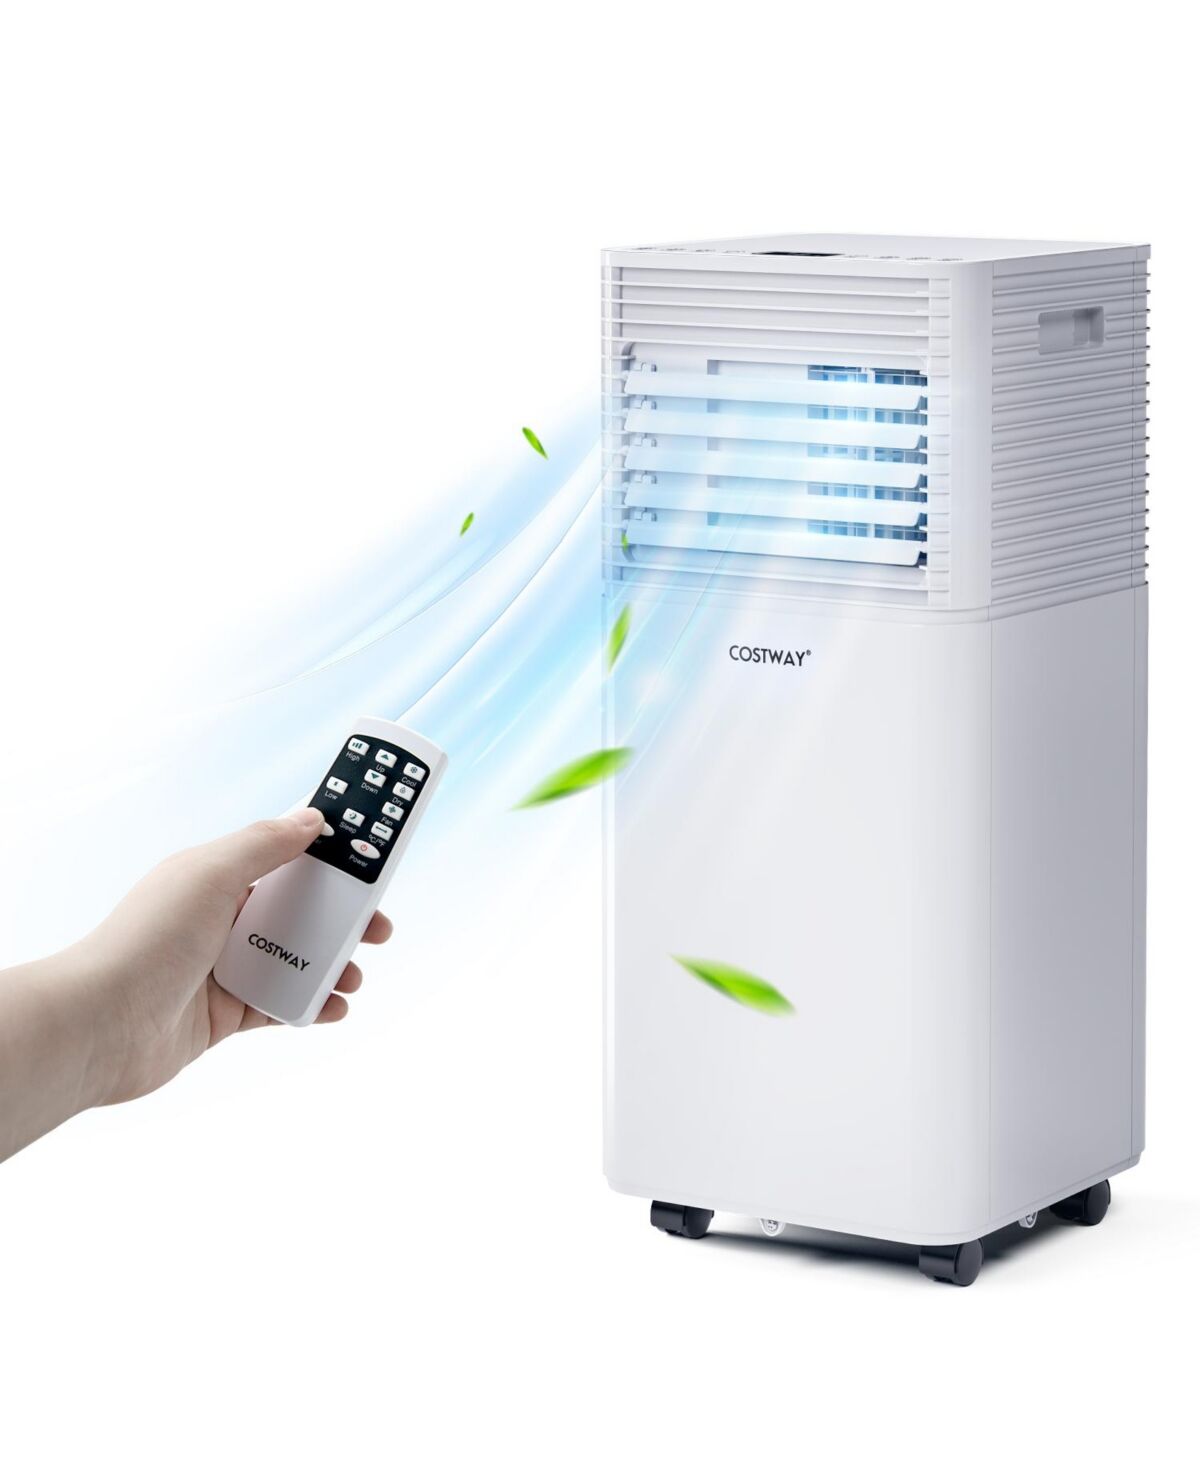 Costway 10000 Btu Portable Air Conditioner 3-in-1 Air Cooler w/Dehumidifier & Fan Mode - White